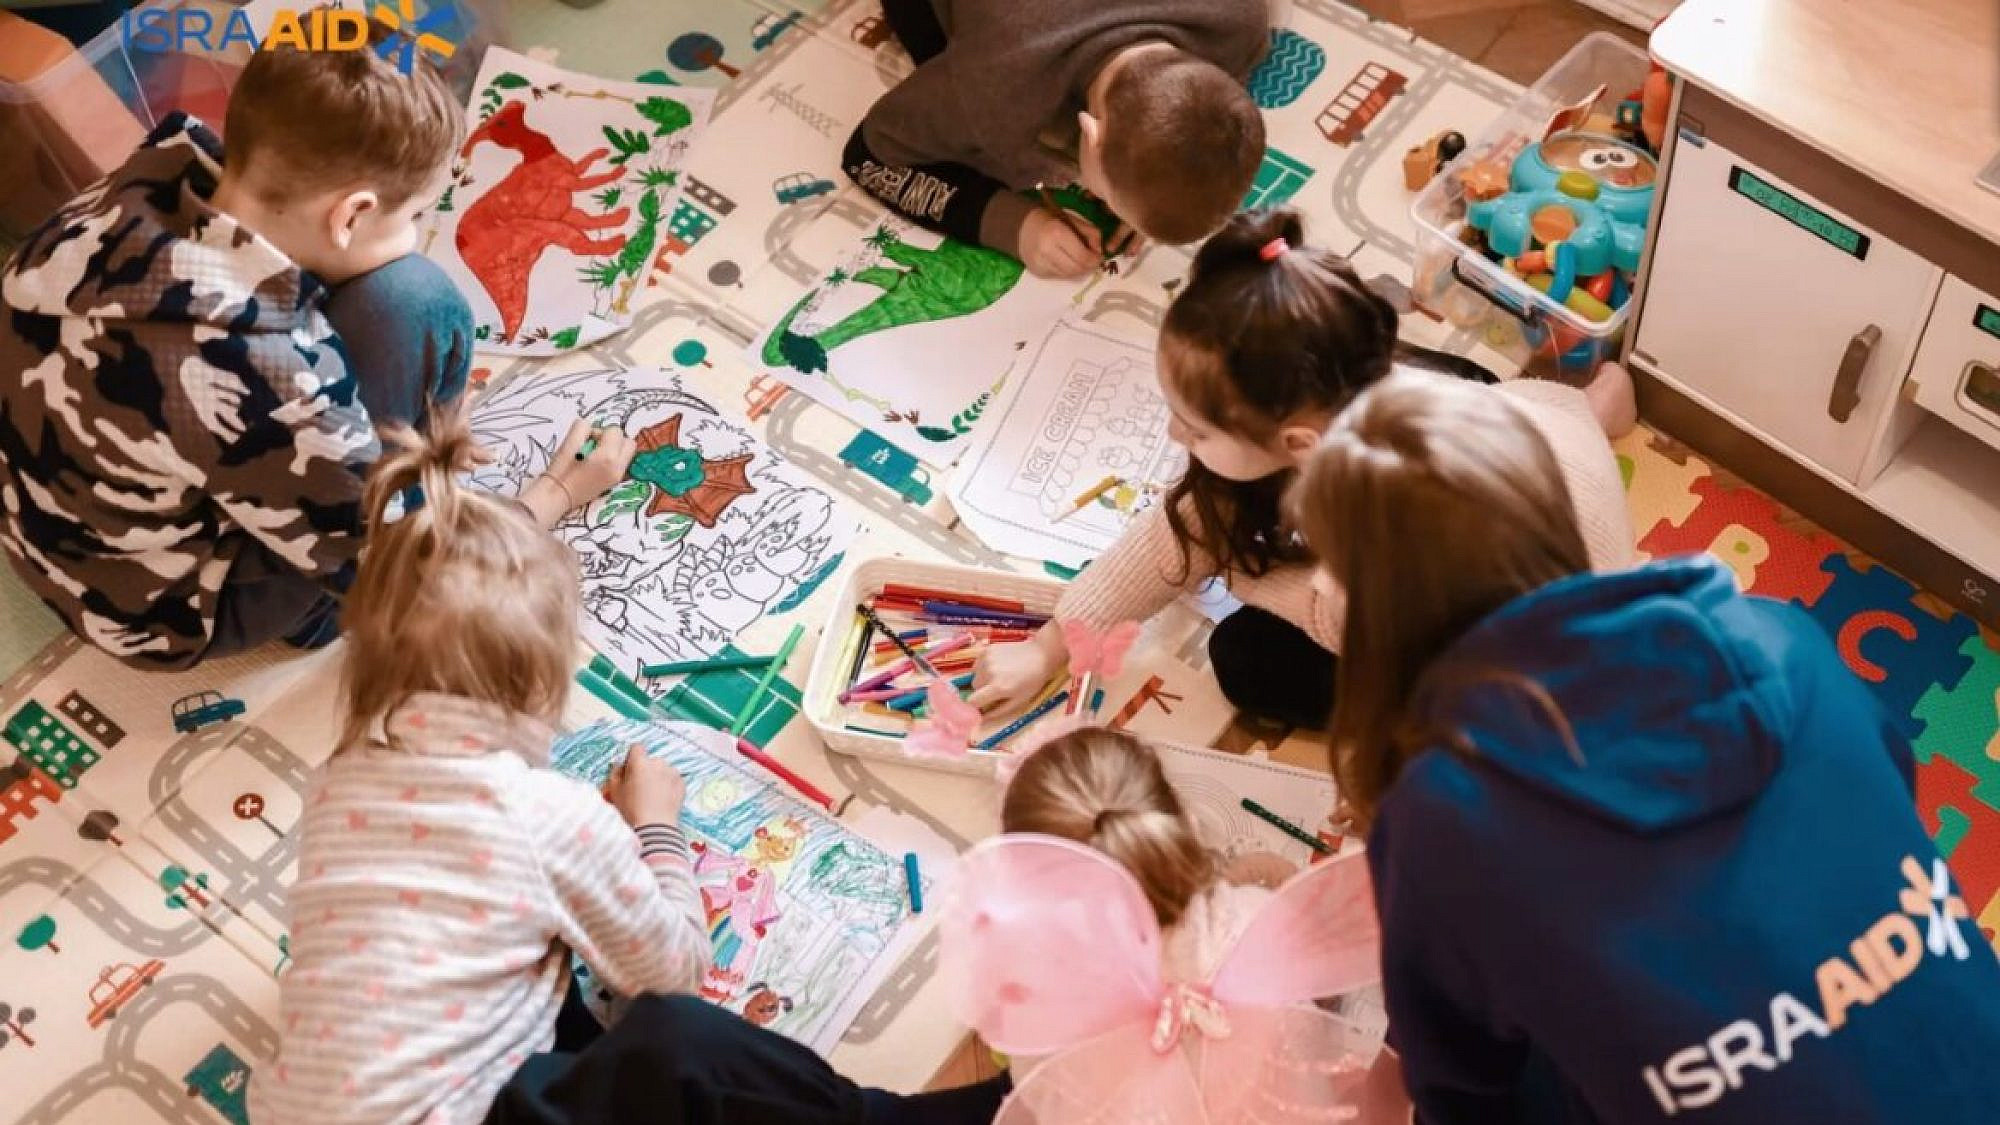 Ukrainian refugee children enjoying activities in an IsraAID community center. Source: Screenshot